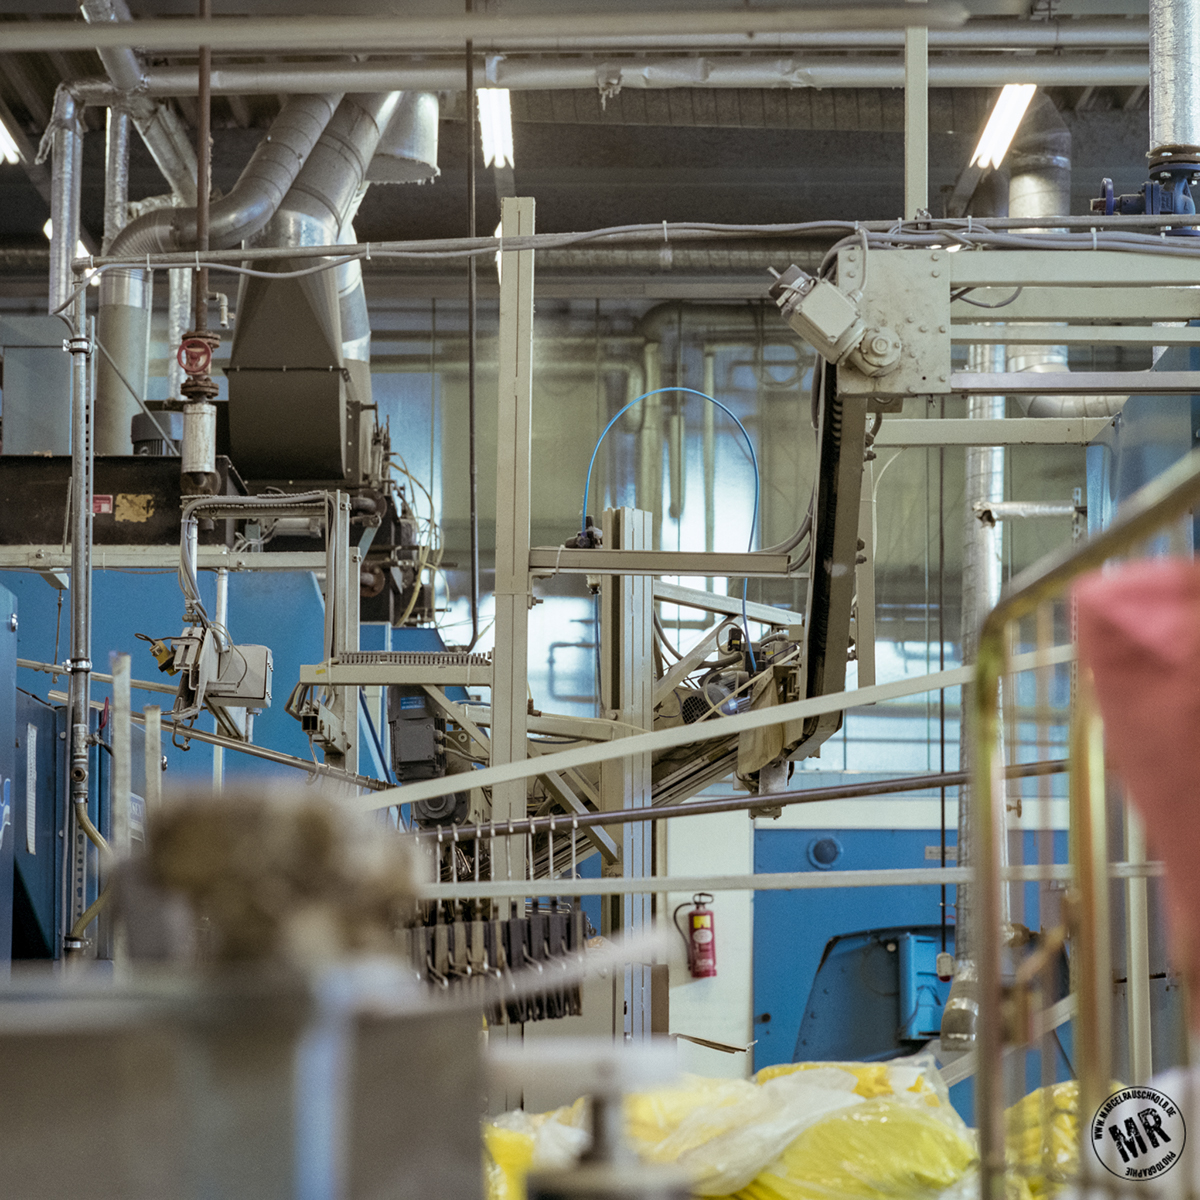 laundry industry abandoned place technic Still Hasselblad rolleiflex Fuji X-Pro 1 Fujicolor 400H